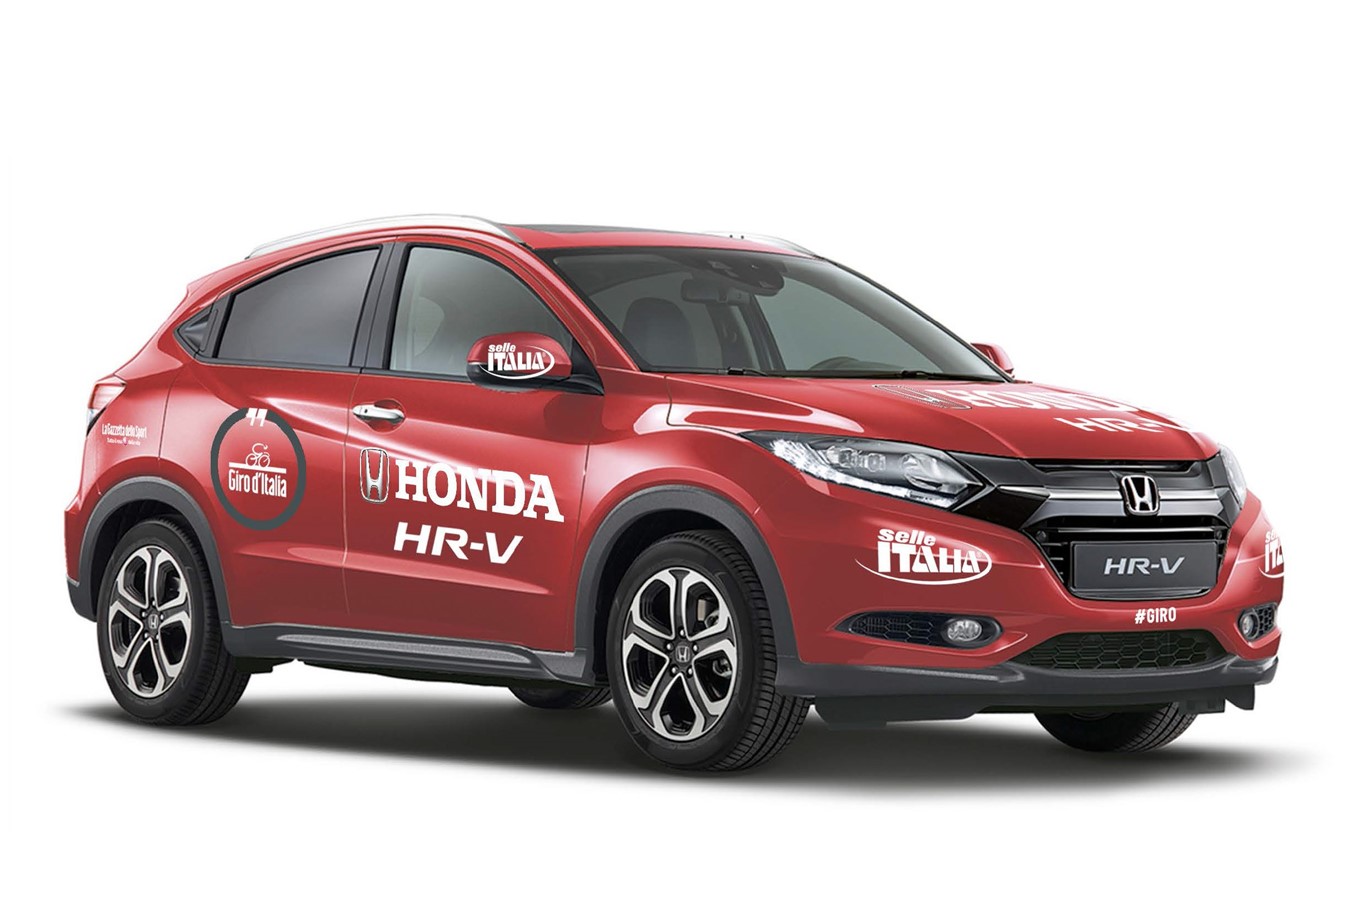 Honda News Round Up - April 2016